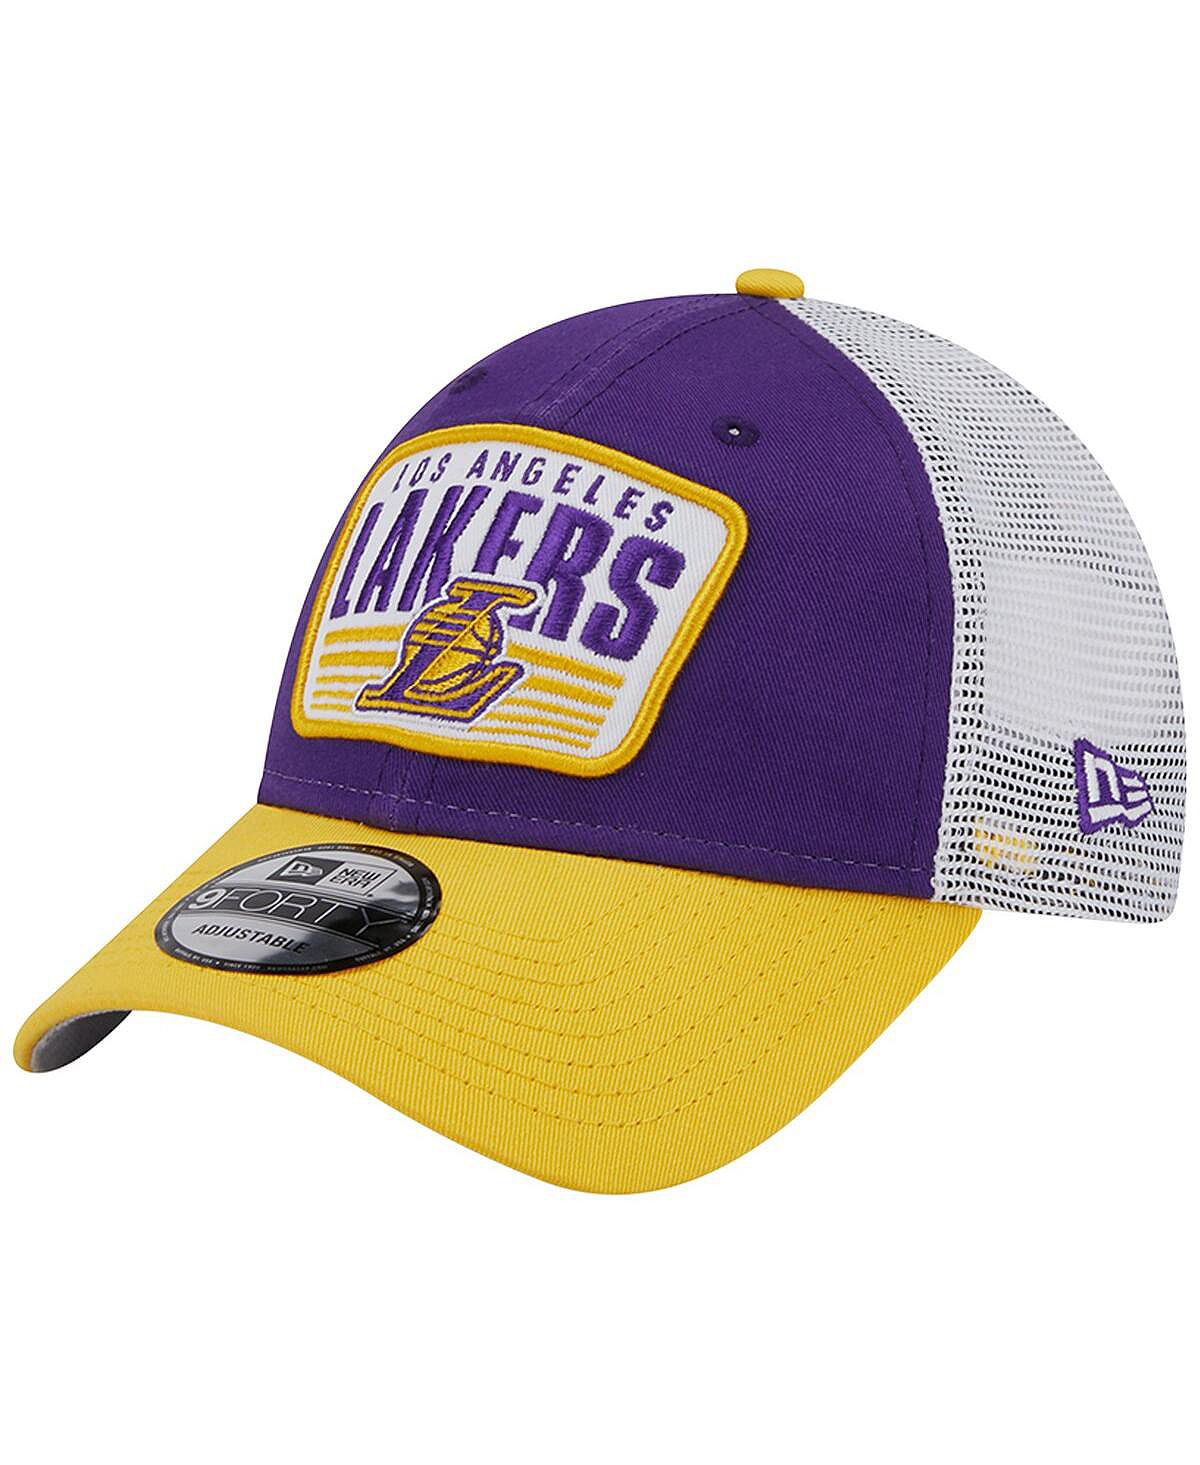 Мужская фиолетовая кепка Los Angeles Lakers с двухцветной нашивкой 9FORTY Trucker Snapback New Era